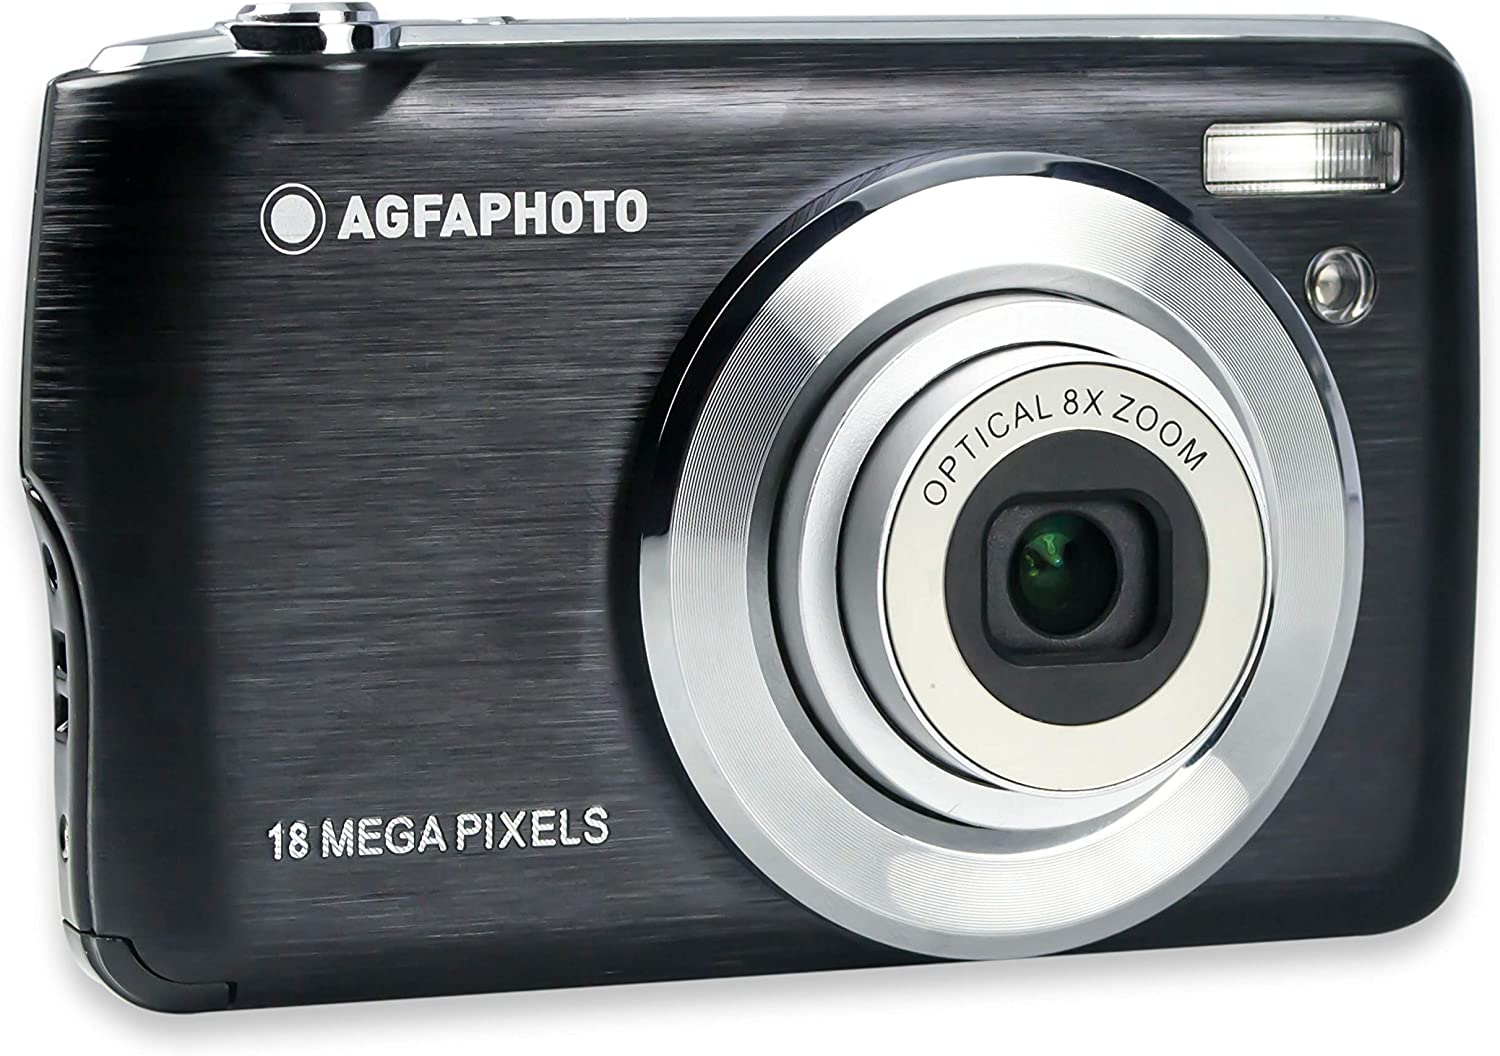 Product Image of Agfa Photo Realishot DC8200 Compact Digital Camera - Black